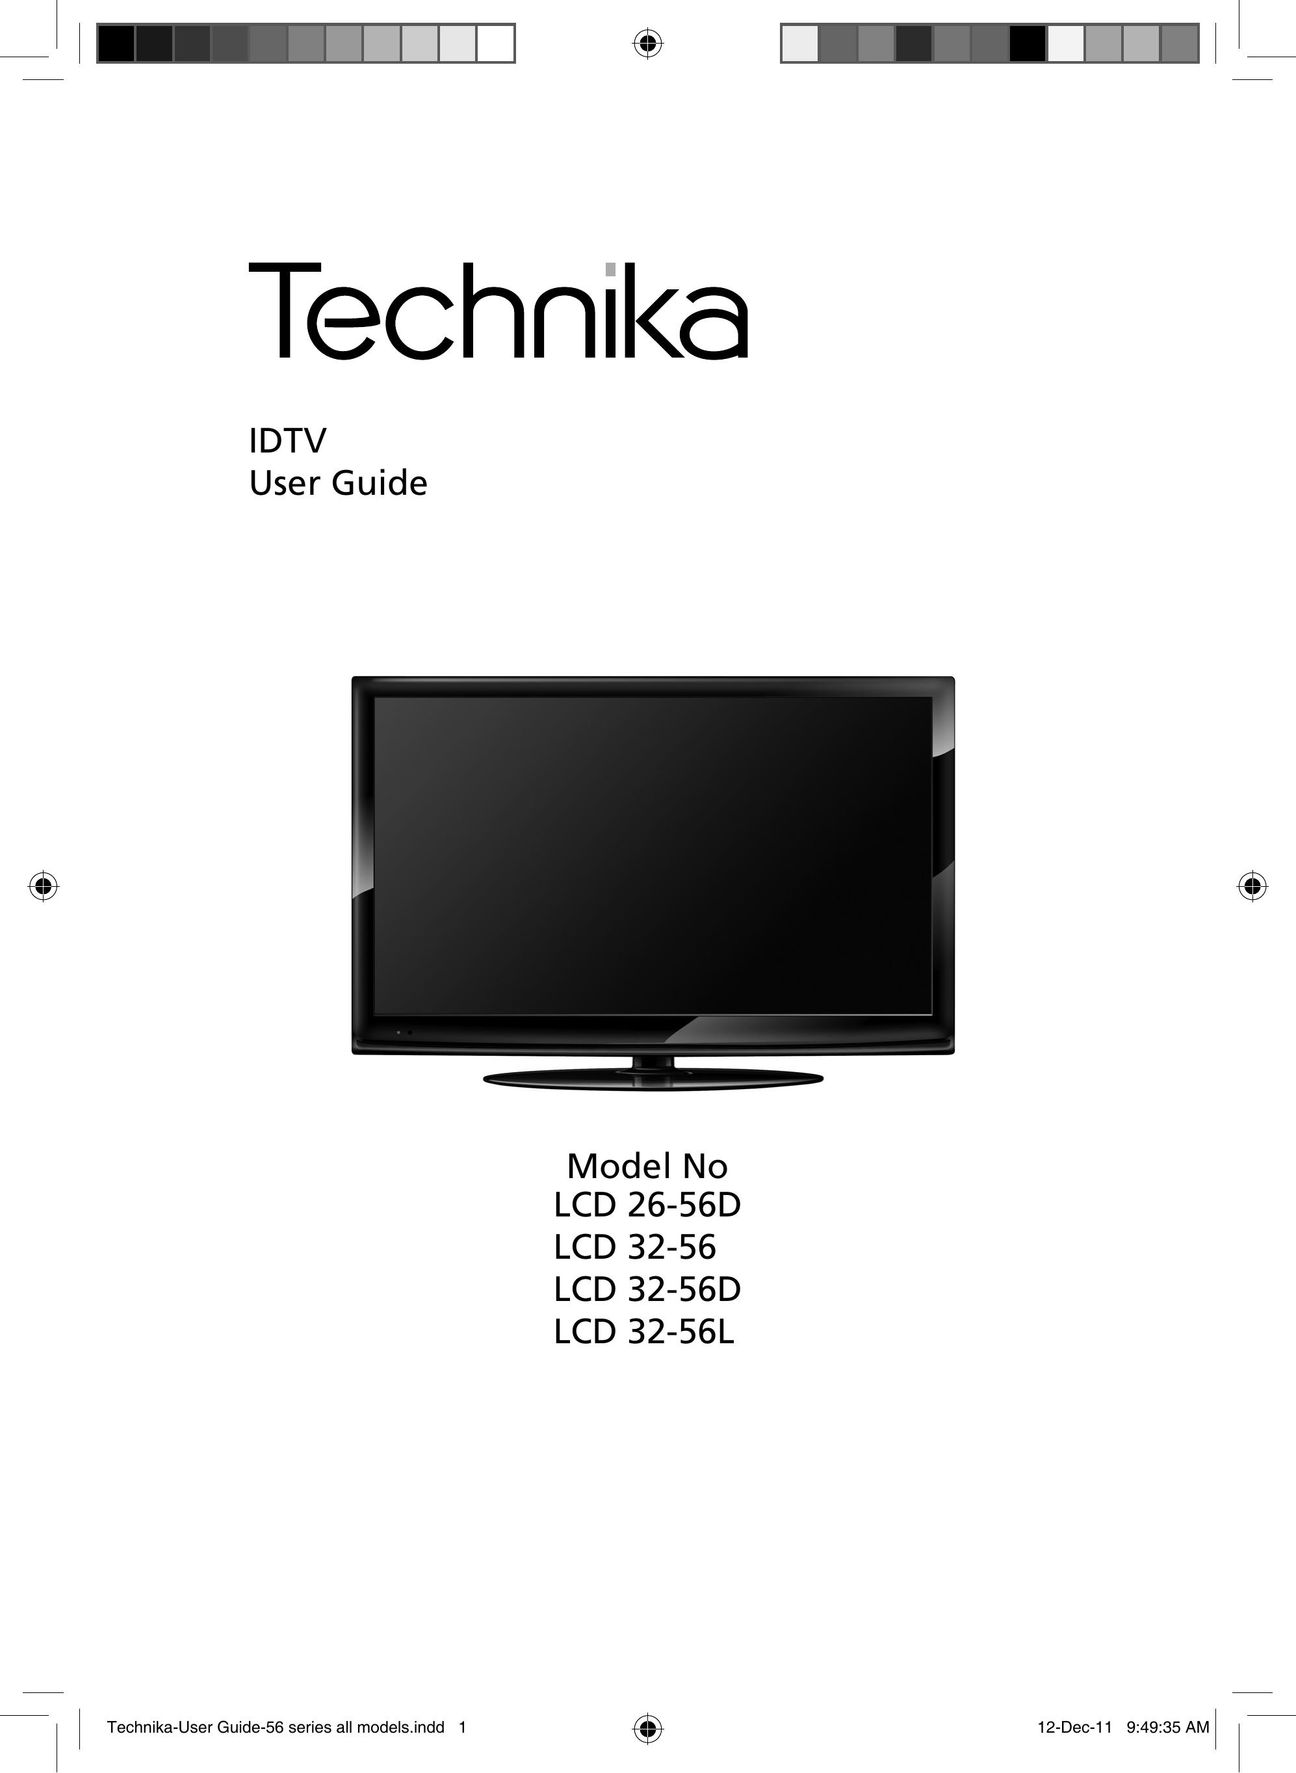 Technika LCD 32-56L Flat Panel Television User Manual